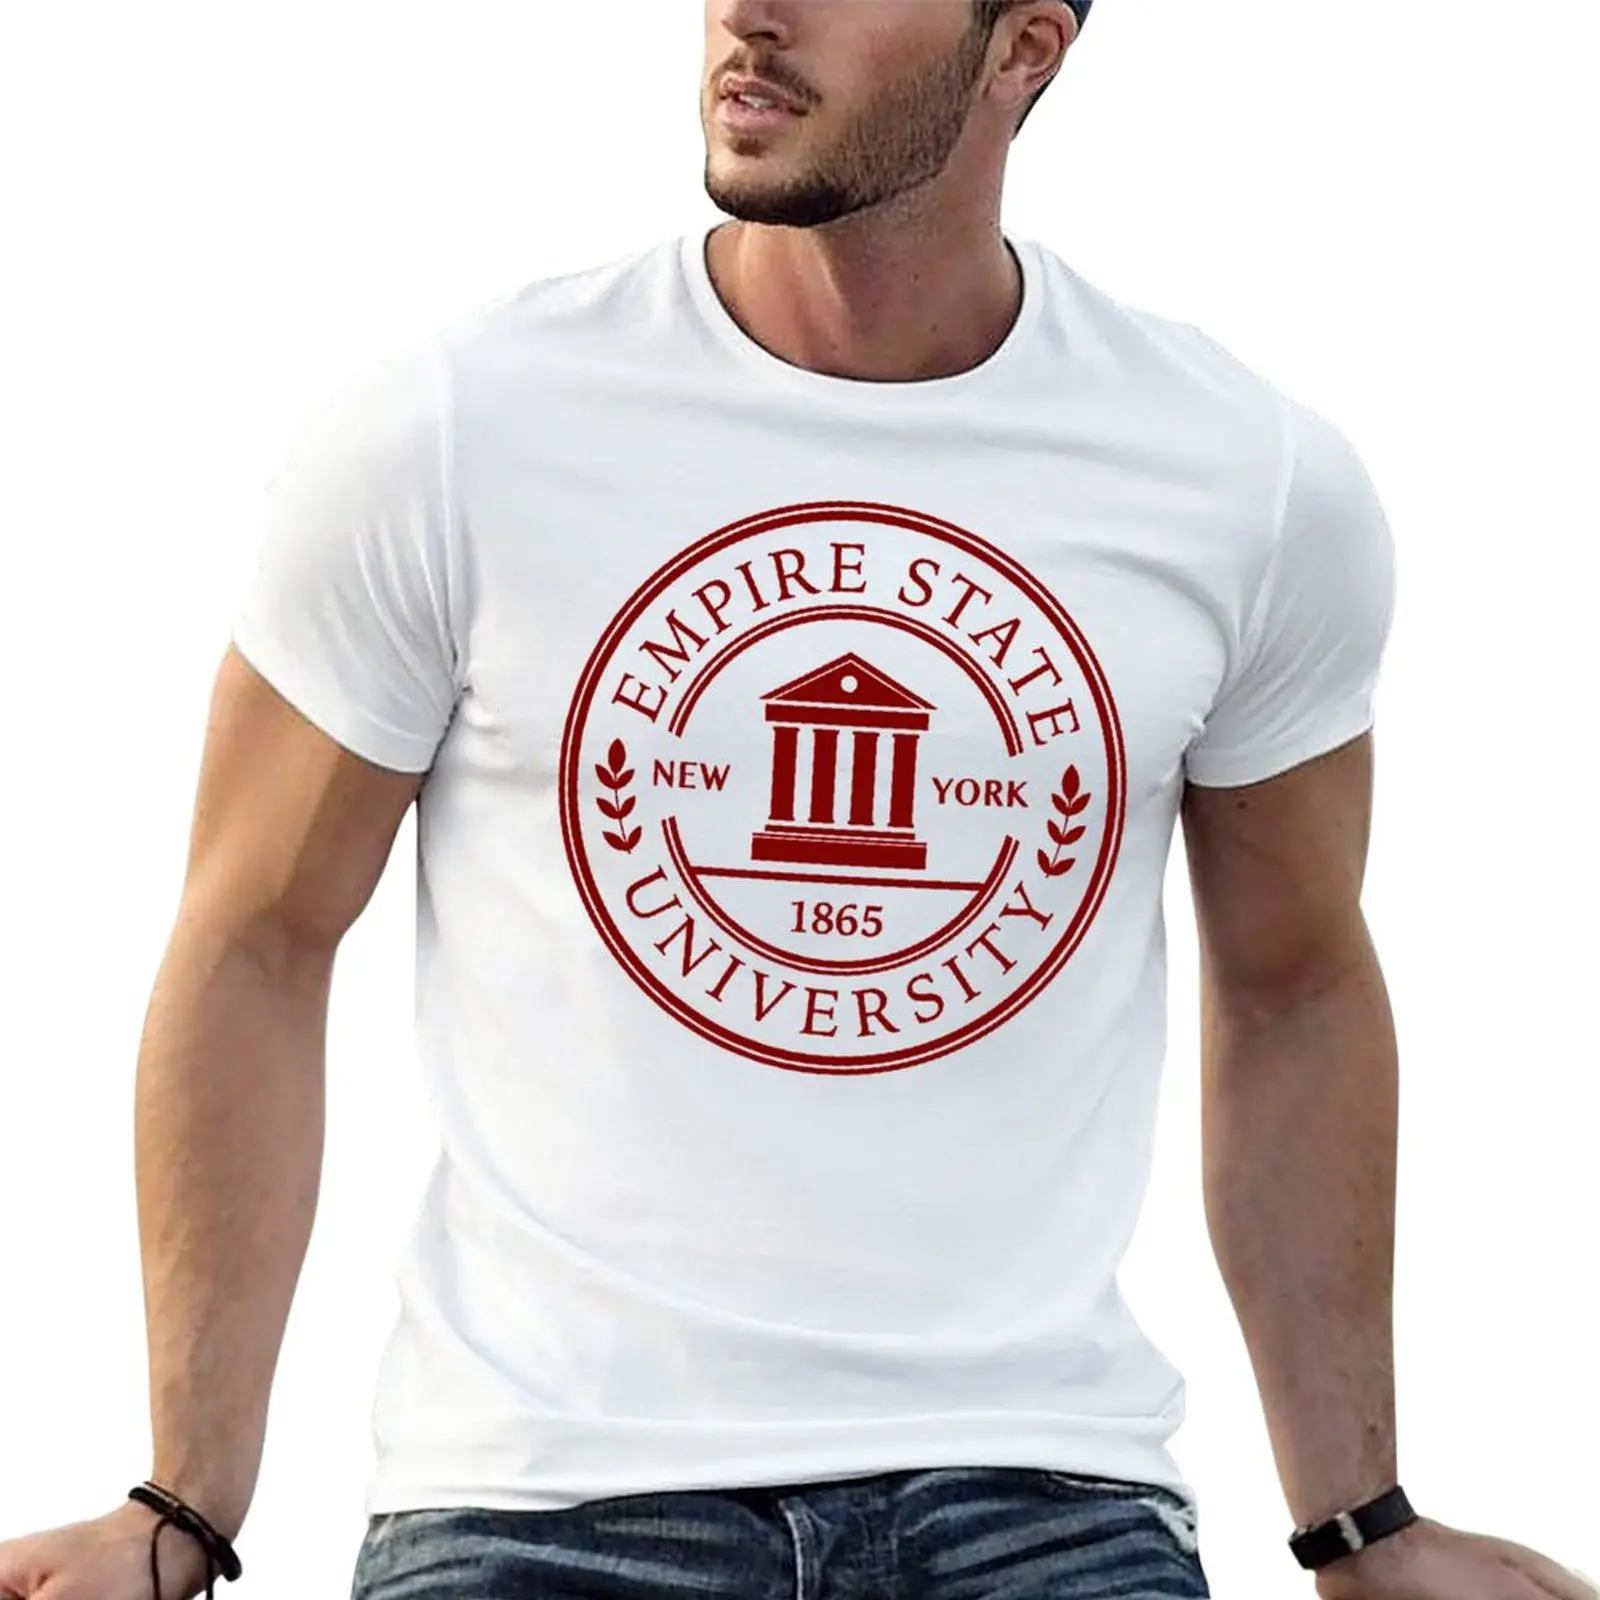 

Empire State University T-Shirt plus sizes Blouse animal prinfor boys funny t shirts for men